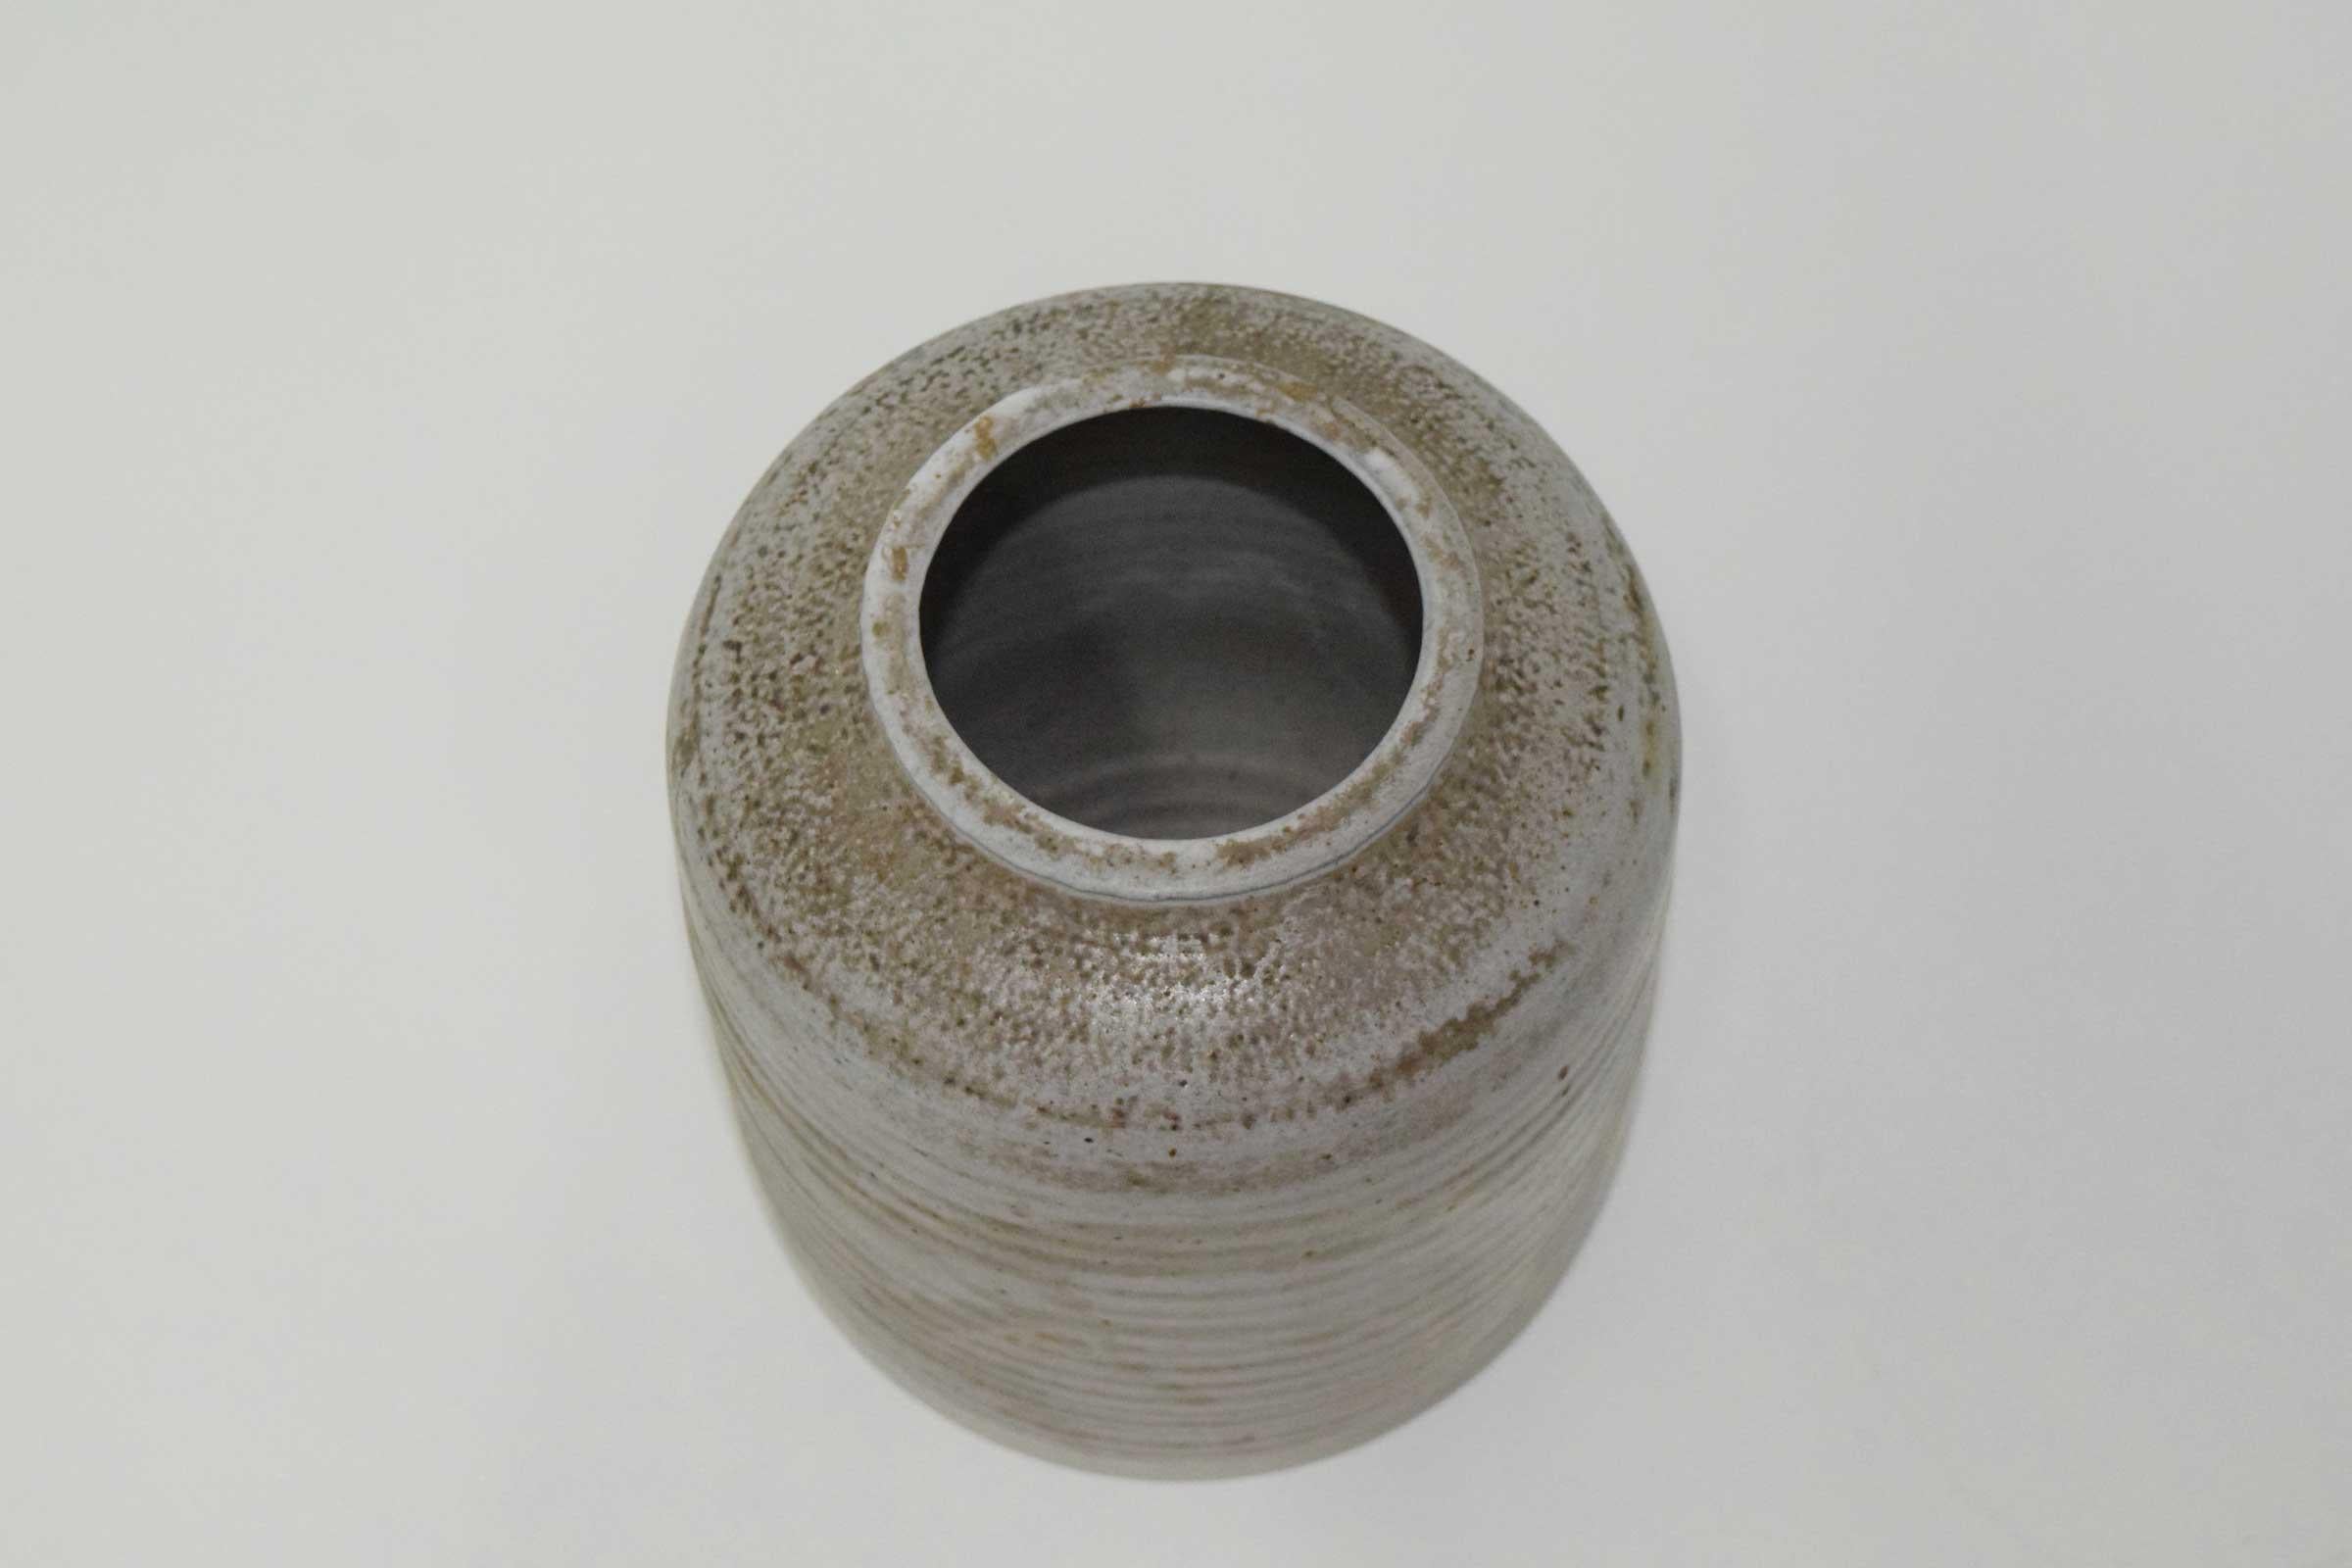 Clyde Burt Ceramic Vessel or Vase In Good Condition For Sale In Dallas, TX